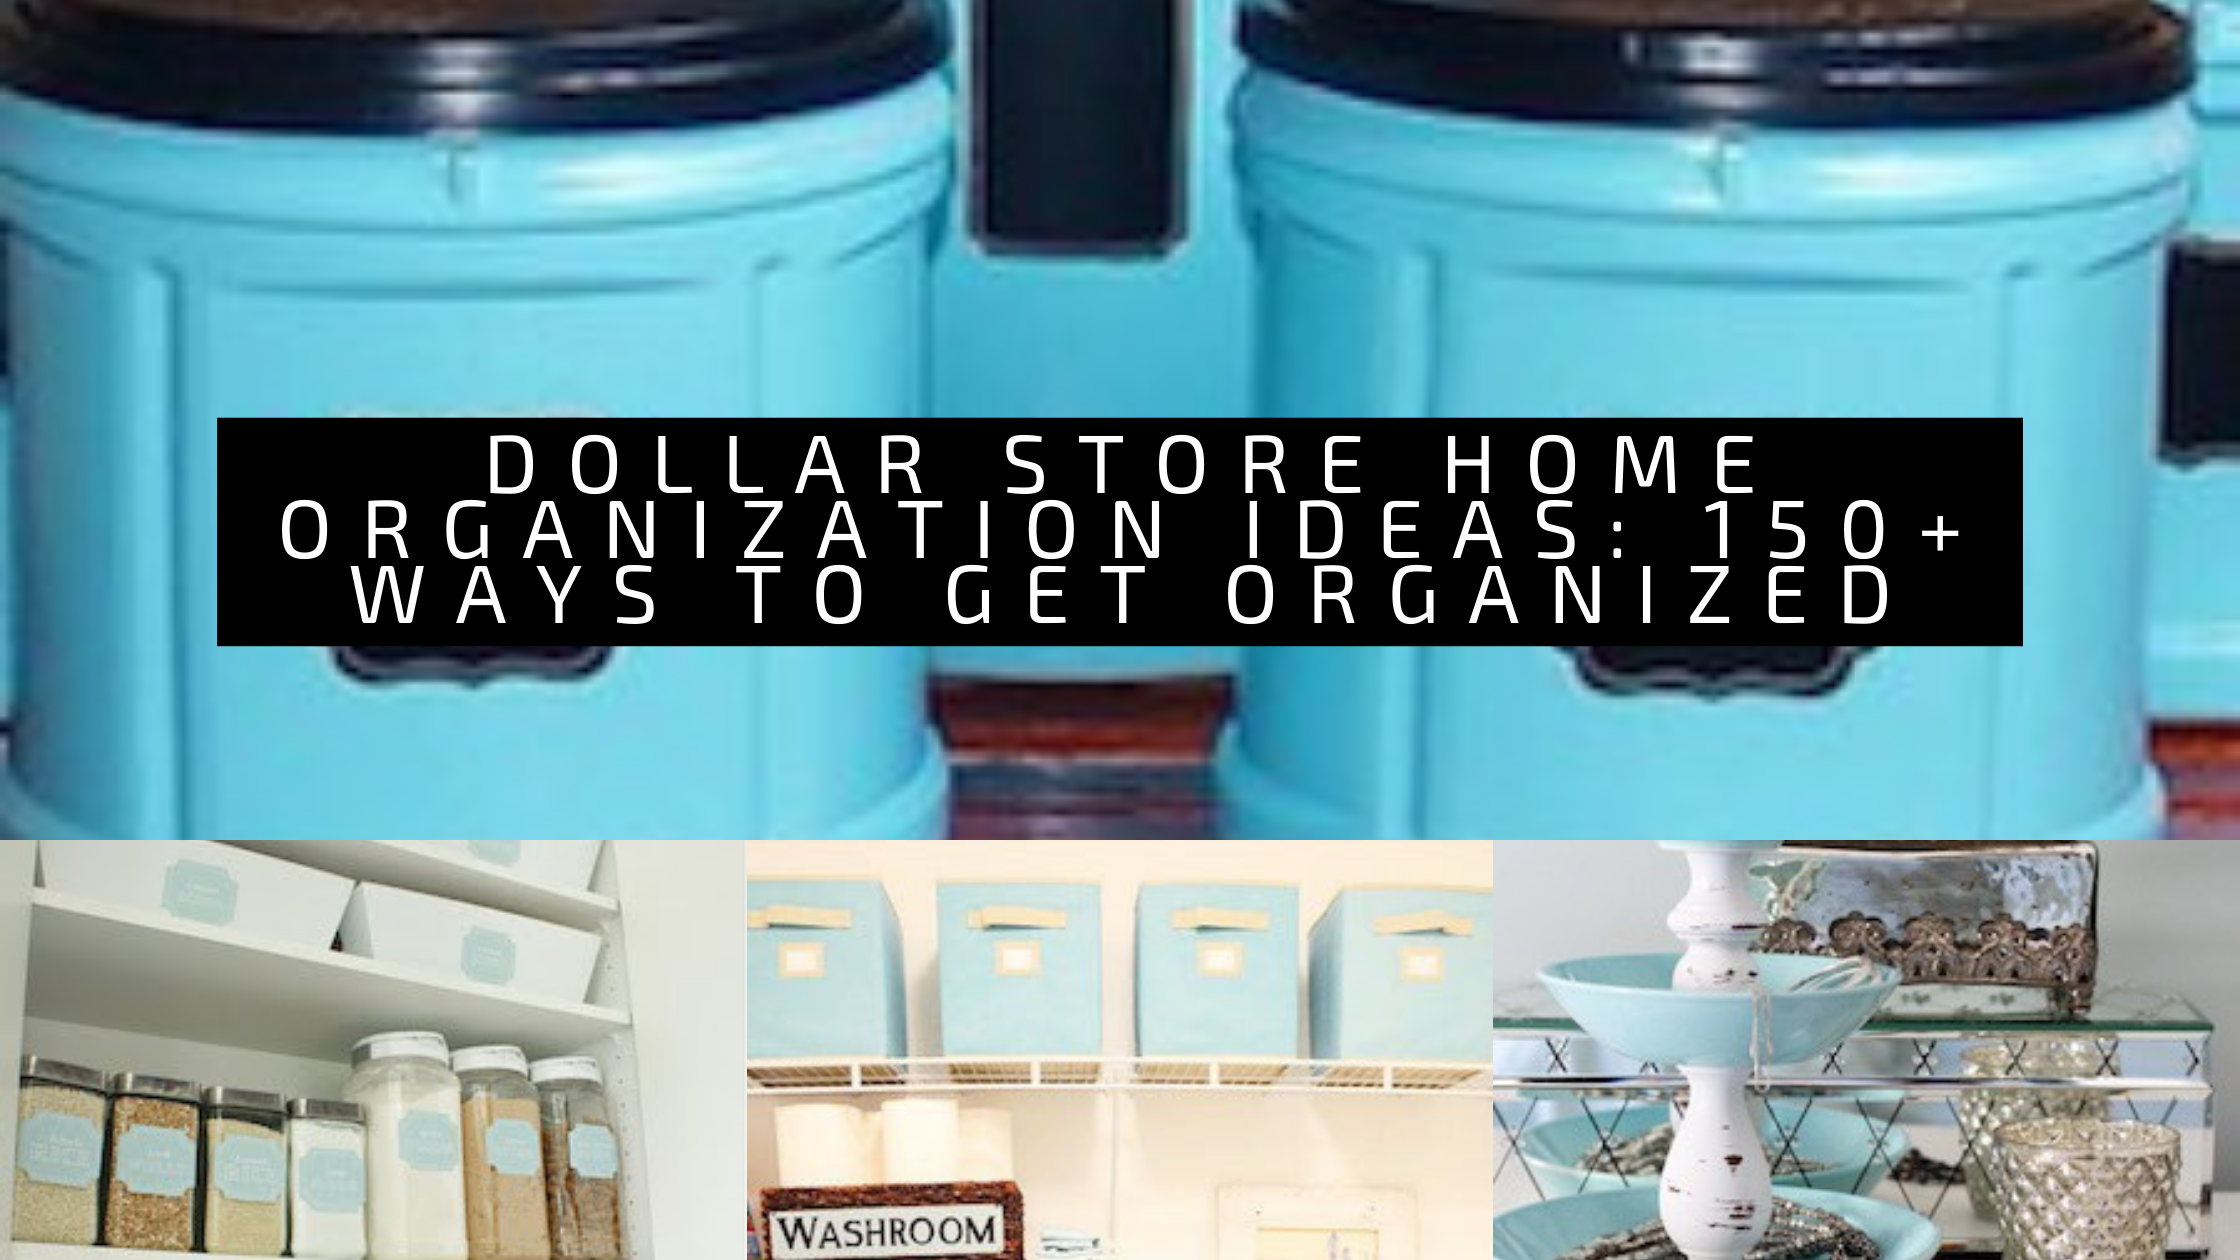 Dollar Store Home Organization Ideas: 150+ Ways to Get Organized 4